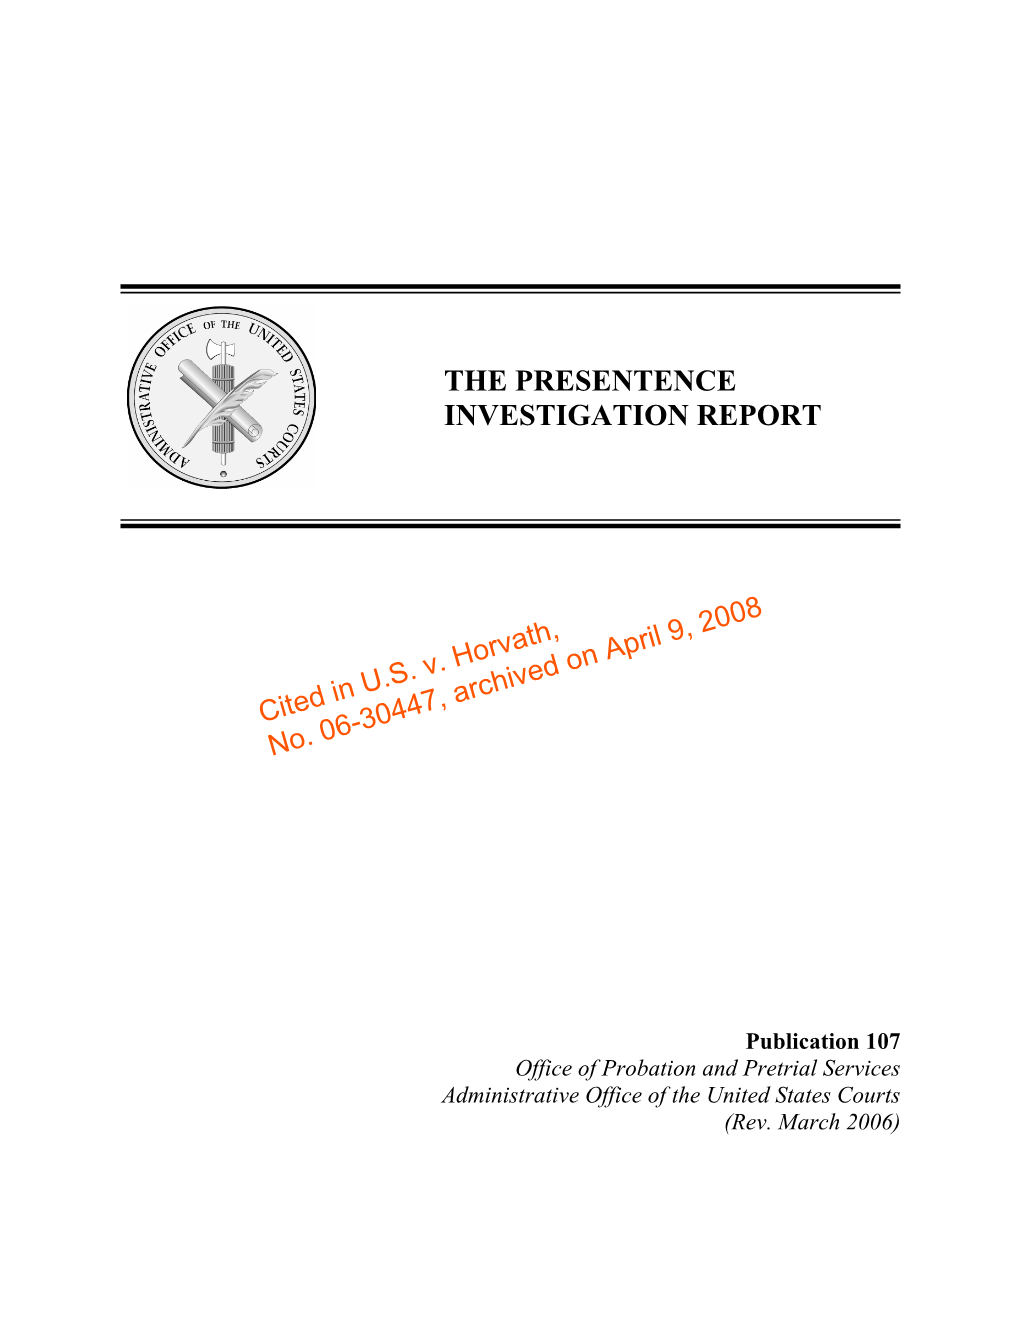 The Presentence Investigation Report